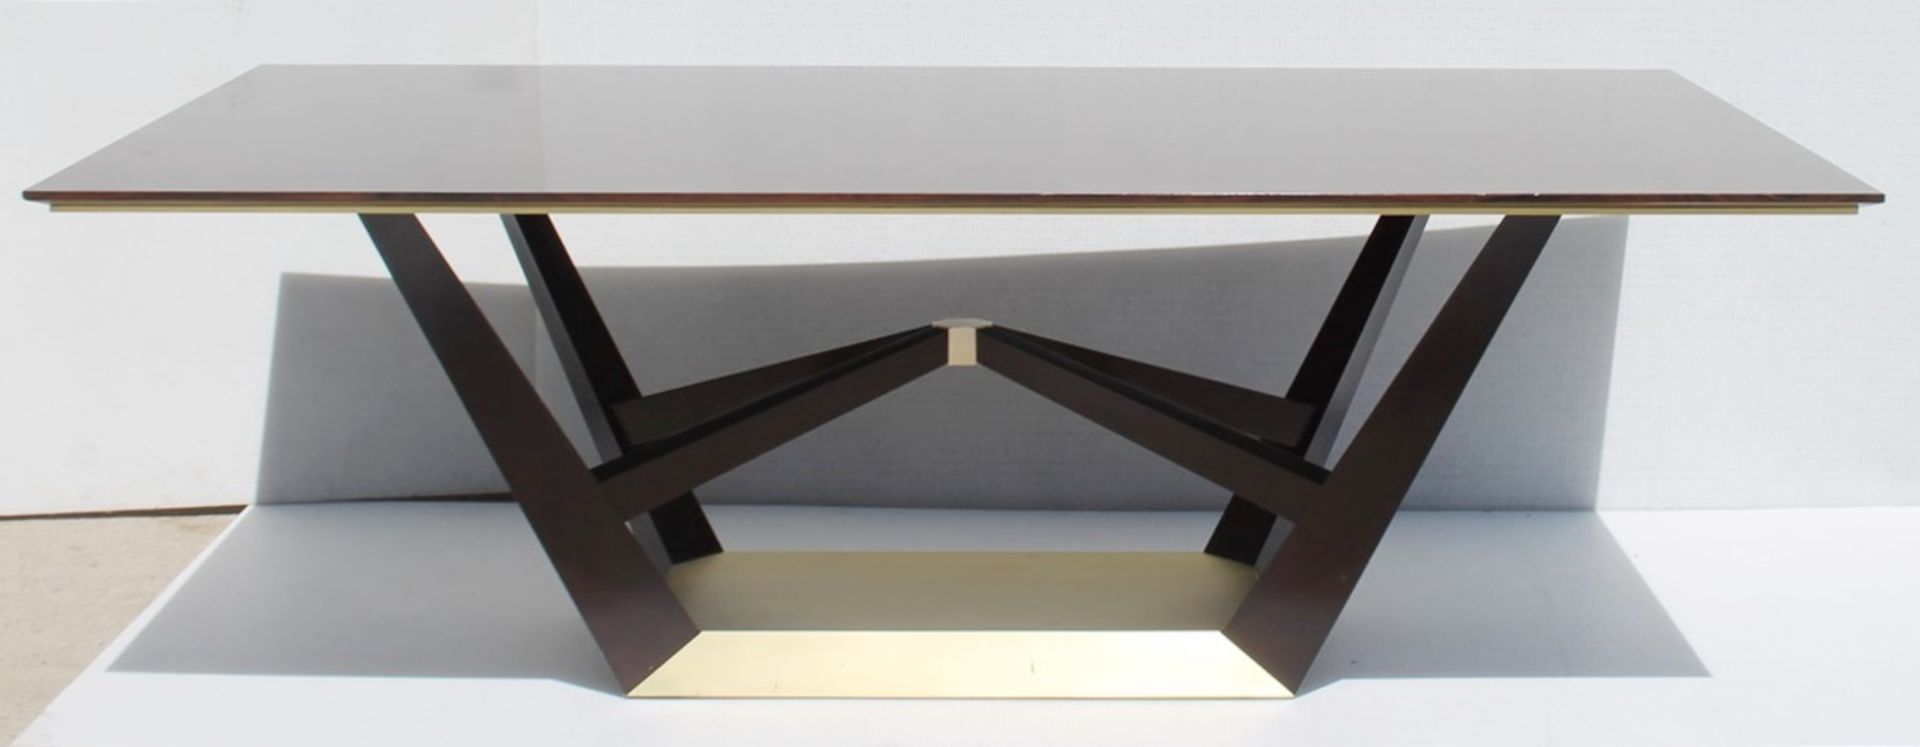 1 x PORADA 'Ellington' Dining Table - 2.2 Metres In Length - Original RRP £7,495 - Image 2 of 12